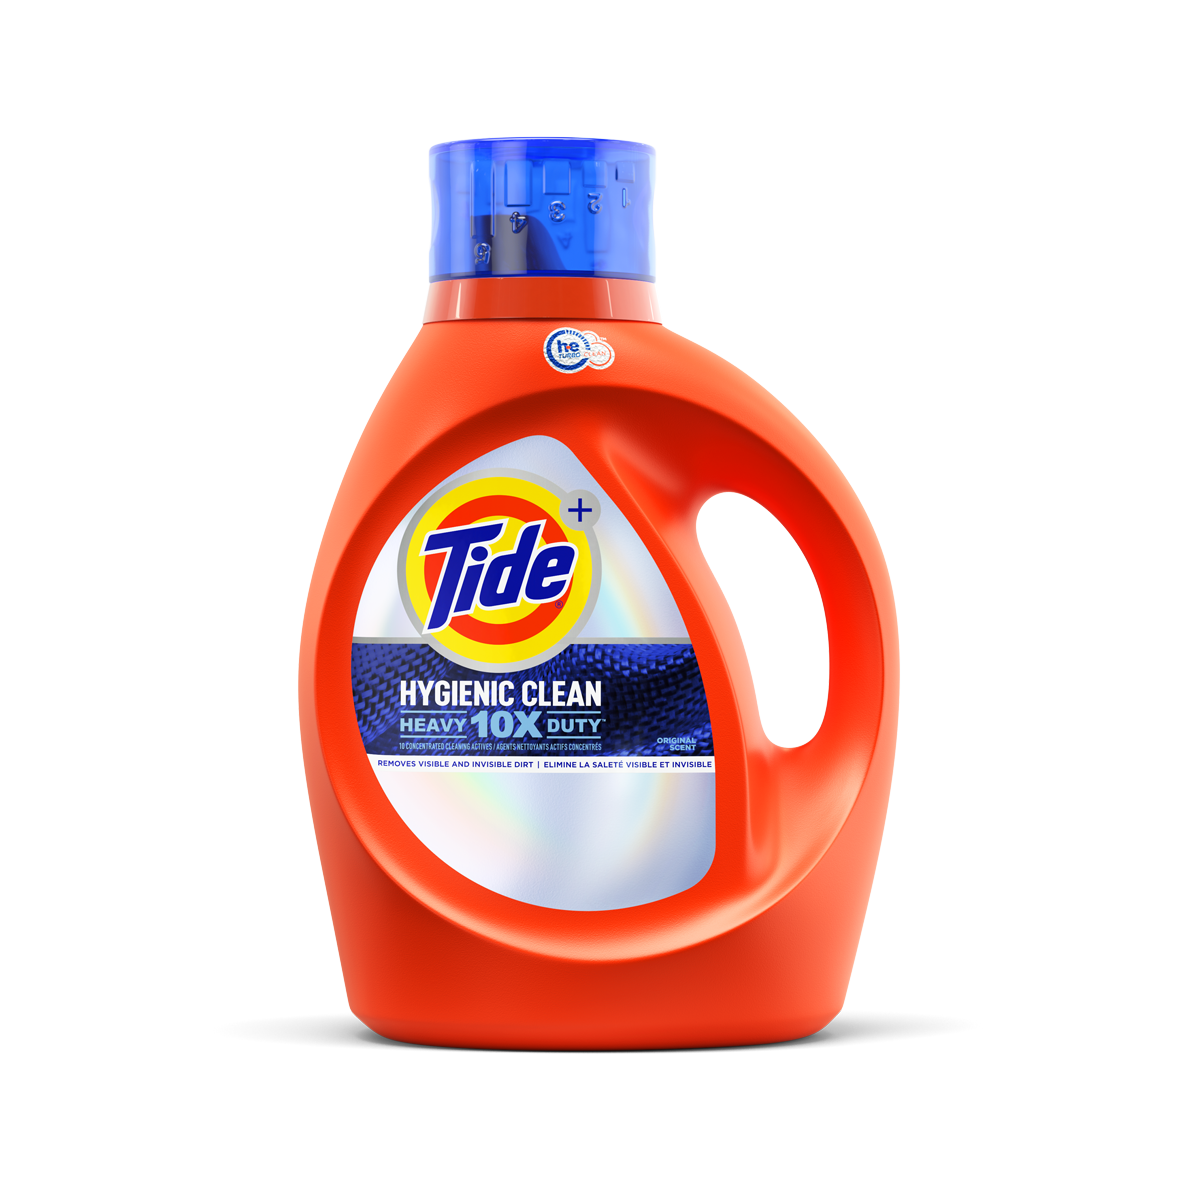 Detergente líquido para la ropa Tide Plus Downy Free - Tide